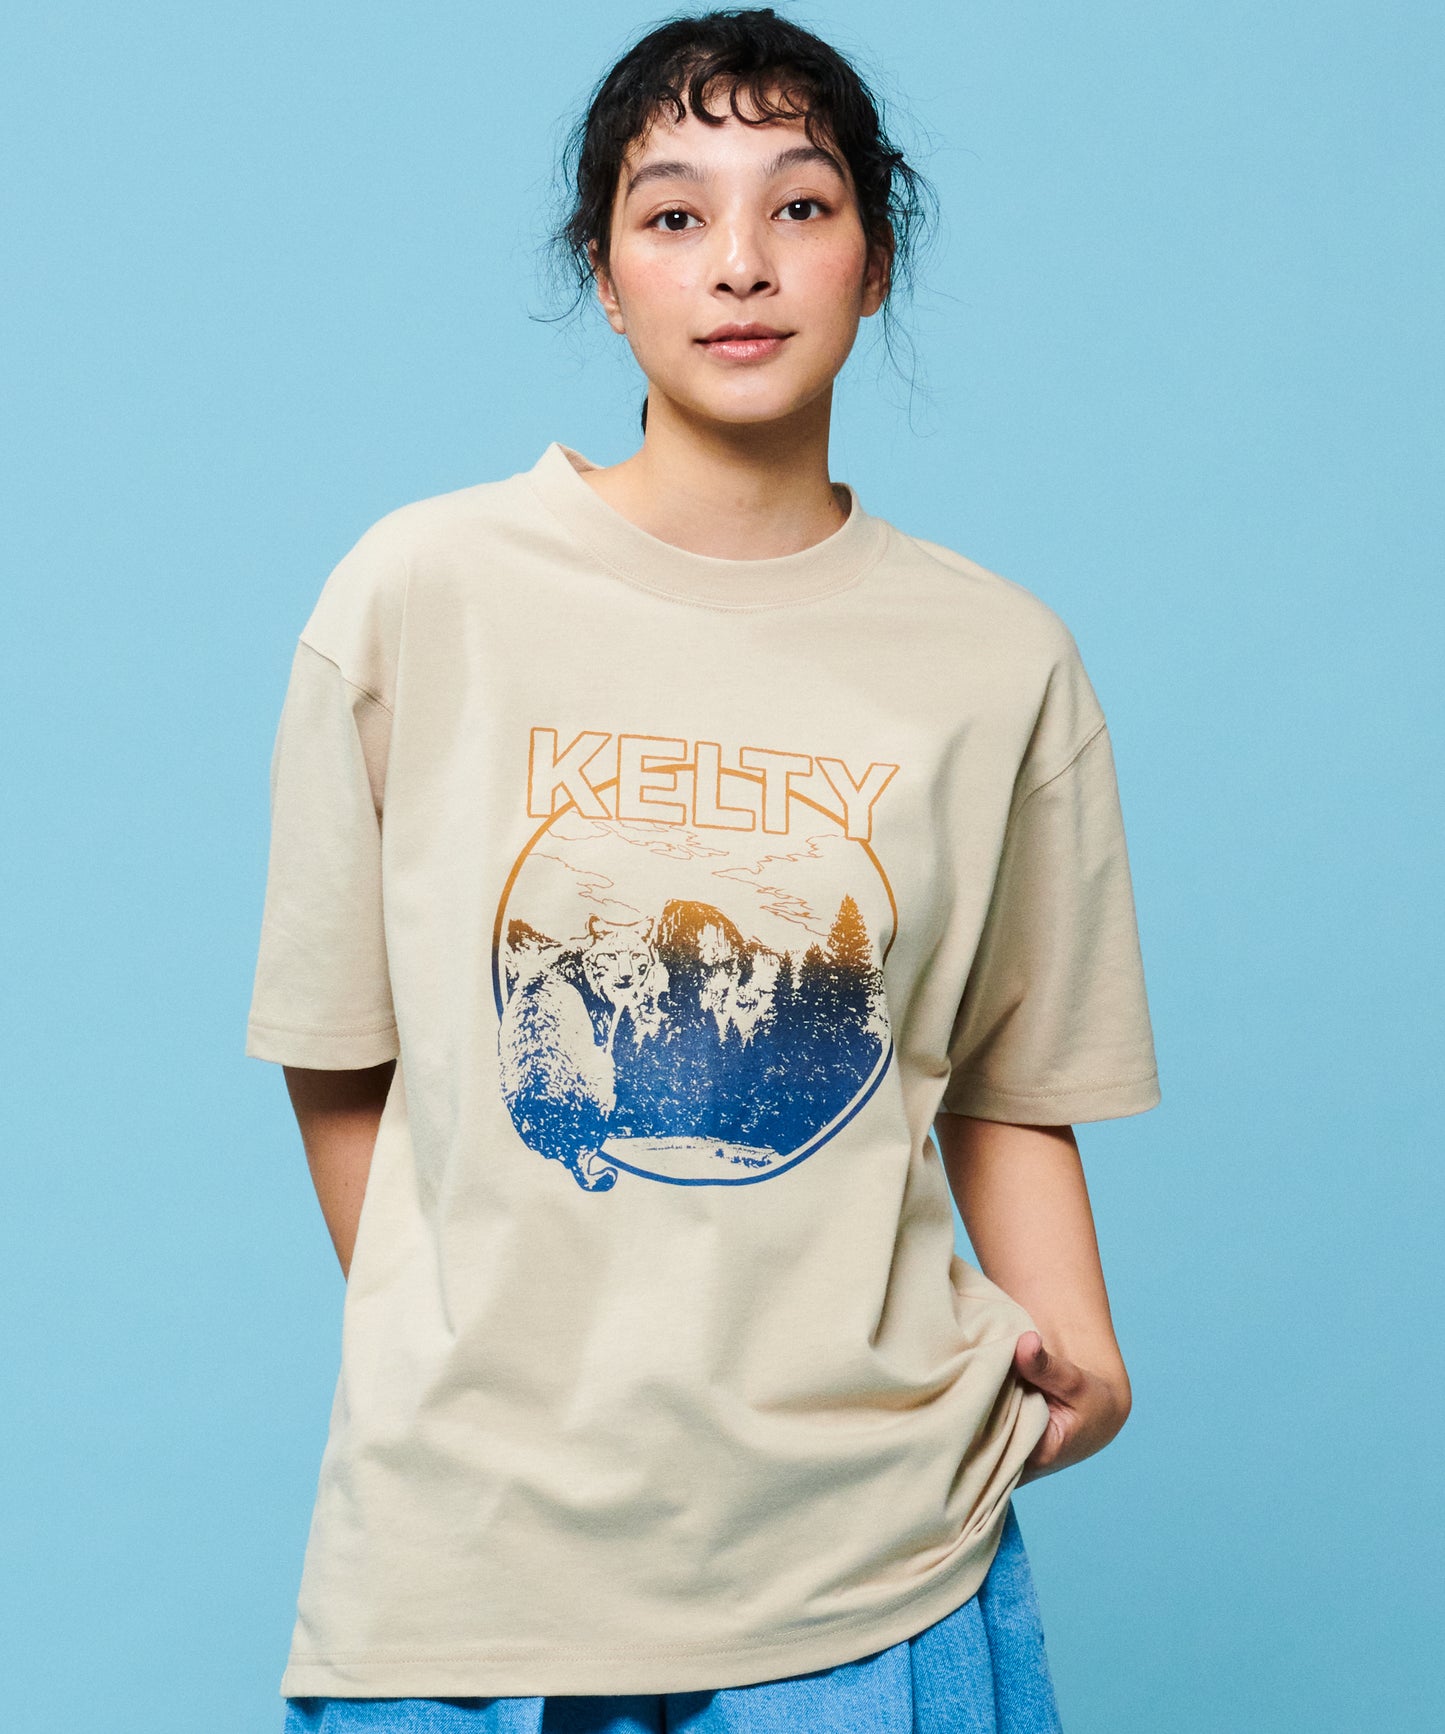 Printed T-shirt "Bobcat" / プリントTシャツ「ボブキャット」